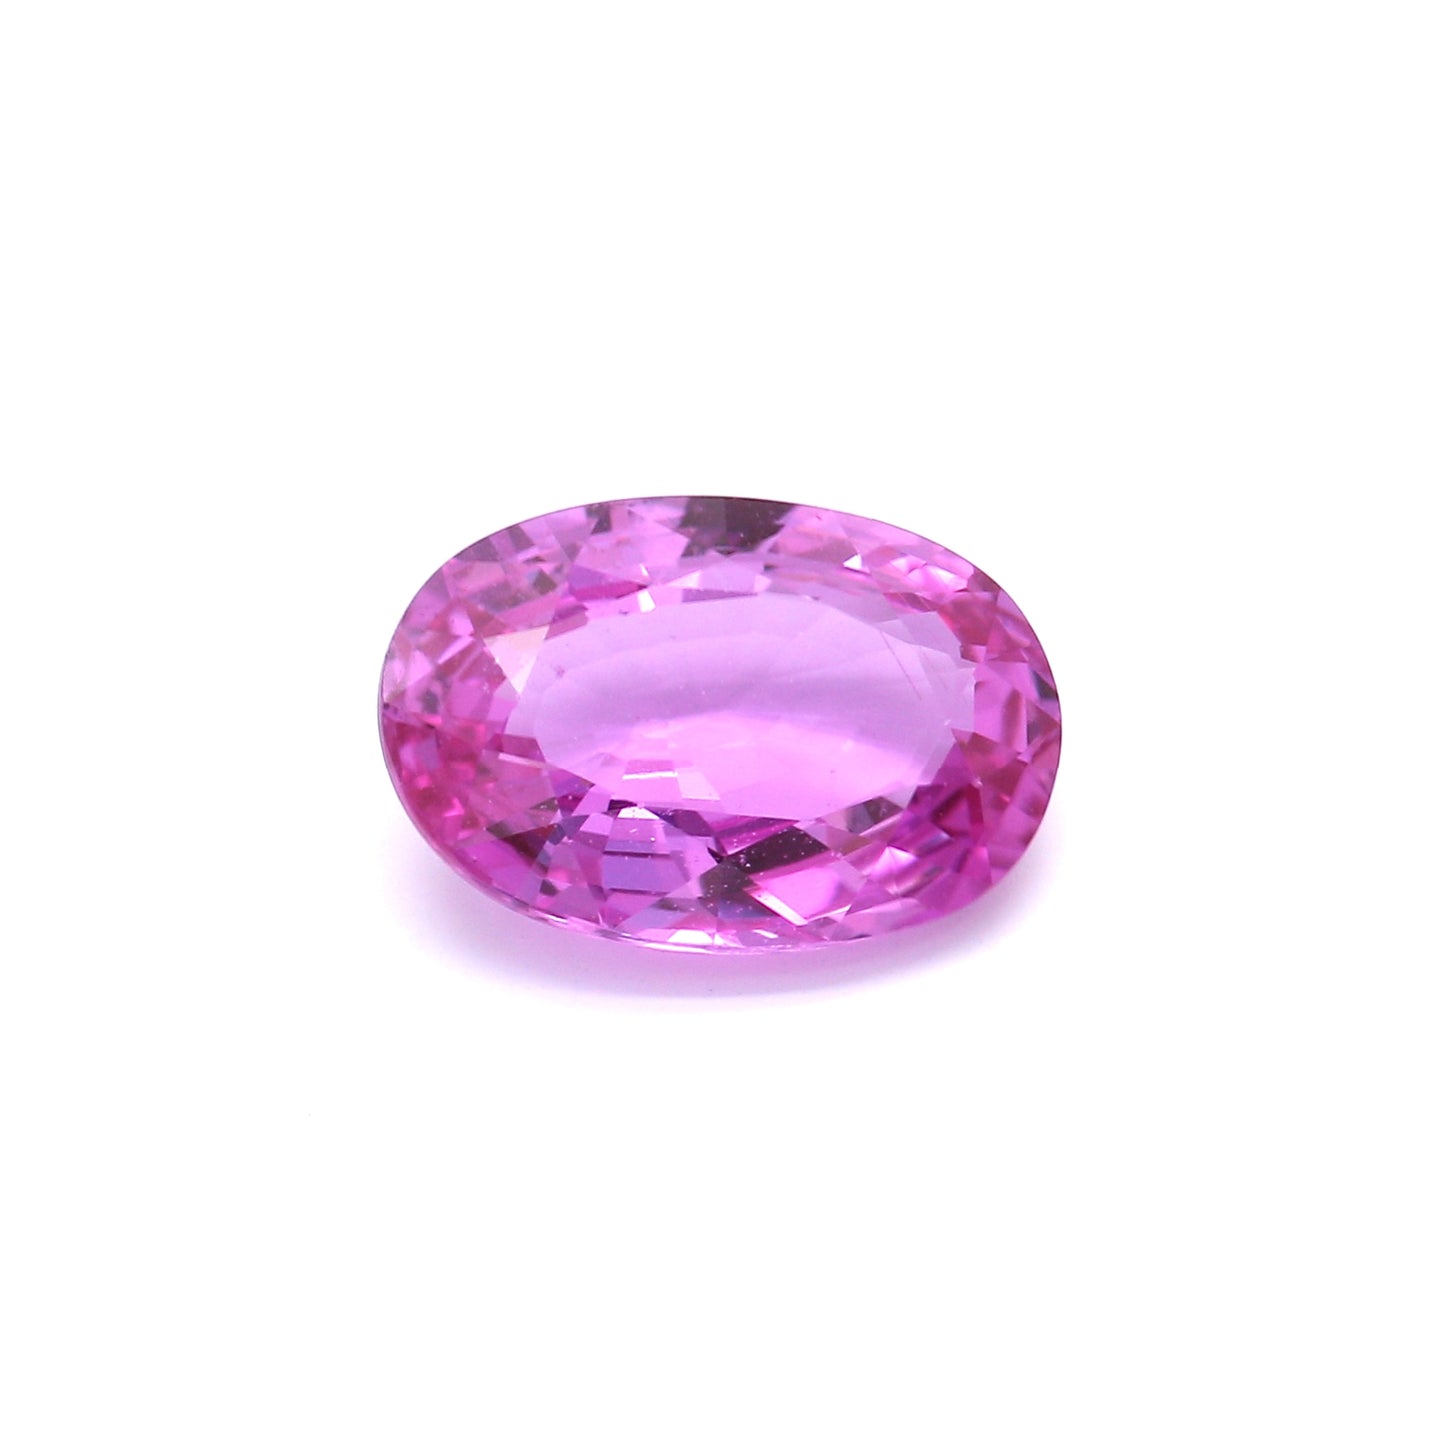 2.02ct Pink, Oval Sapphire, No Heat, Madagascar - 9.38 x 6.44 x 3.57mm